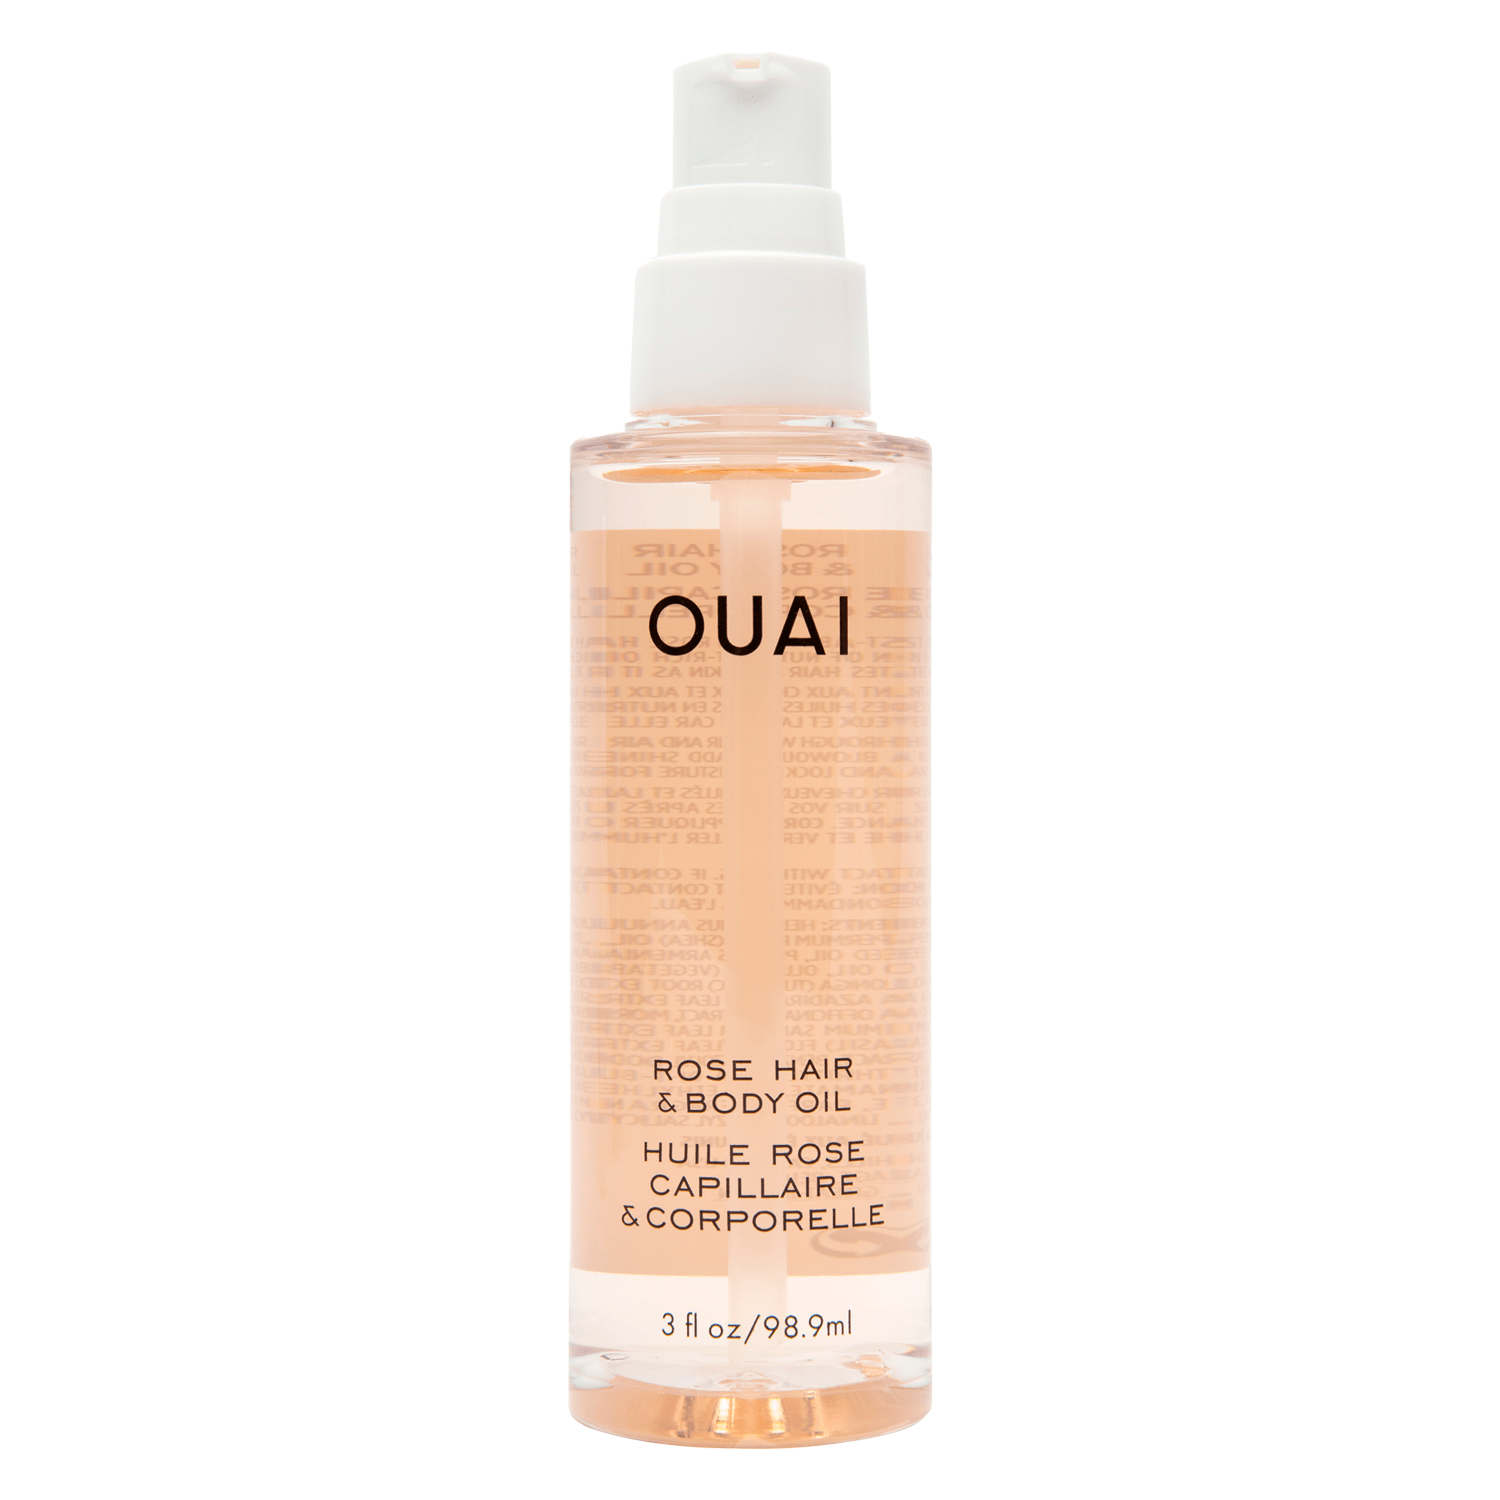 Produktbild von OUAI - Rose Hair & Body Oil